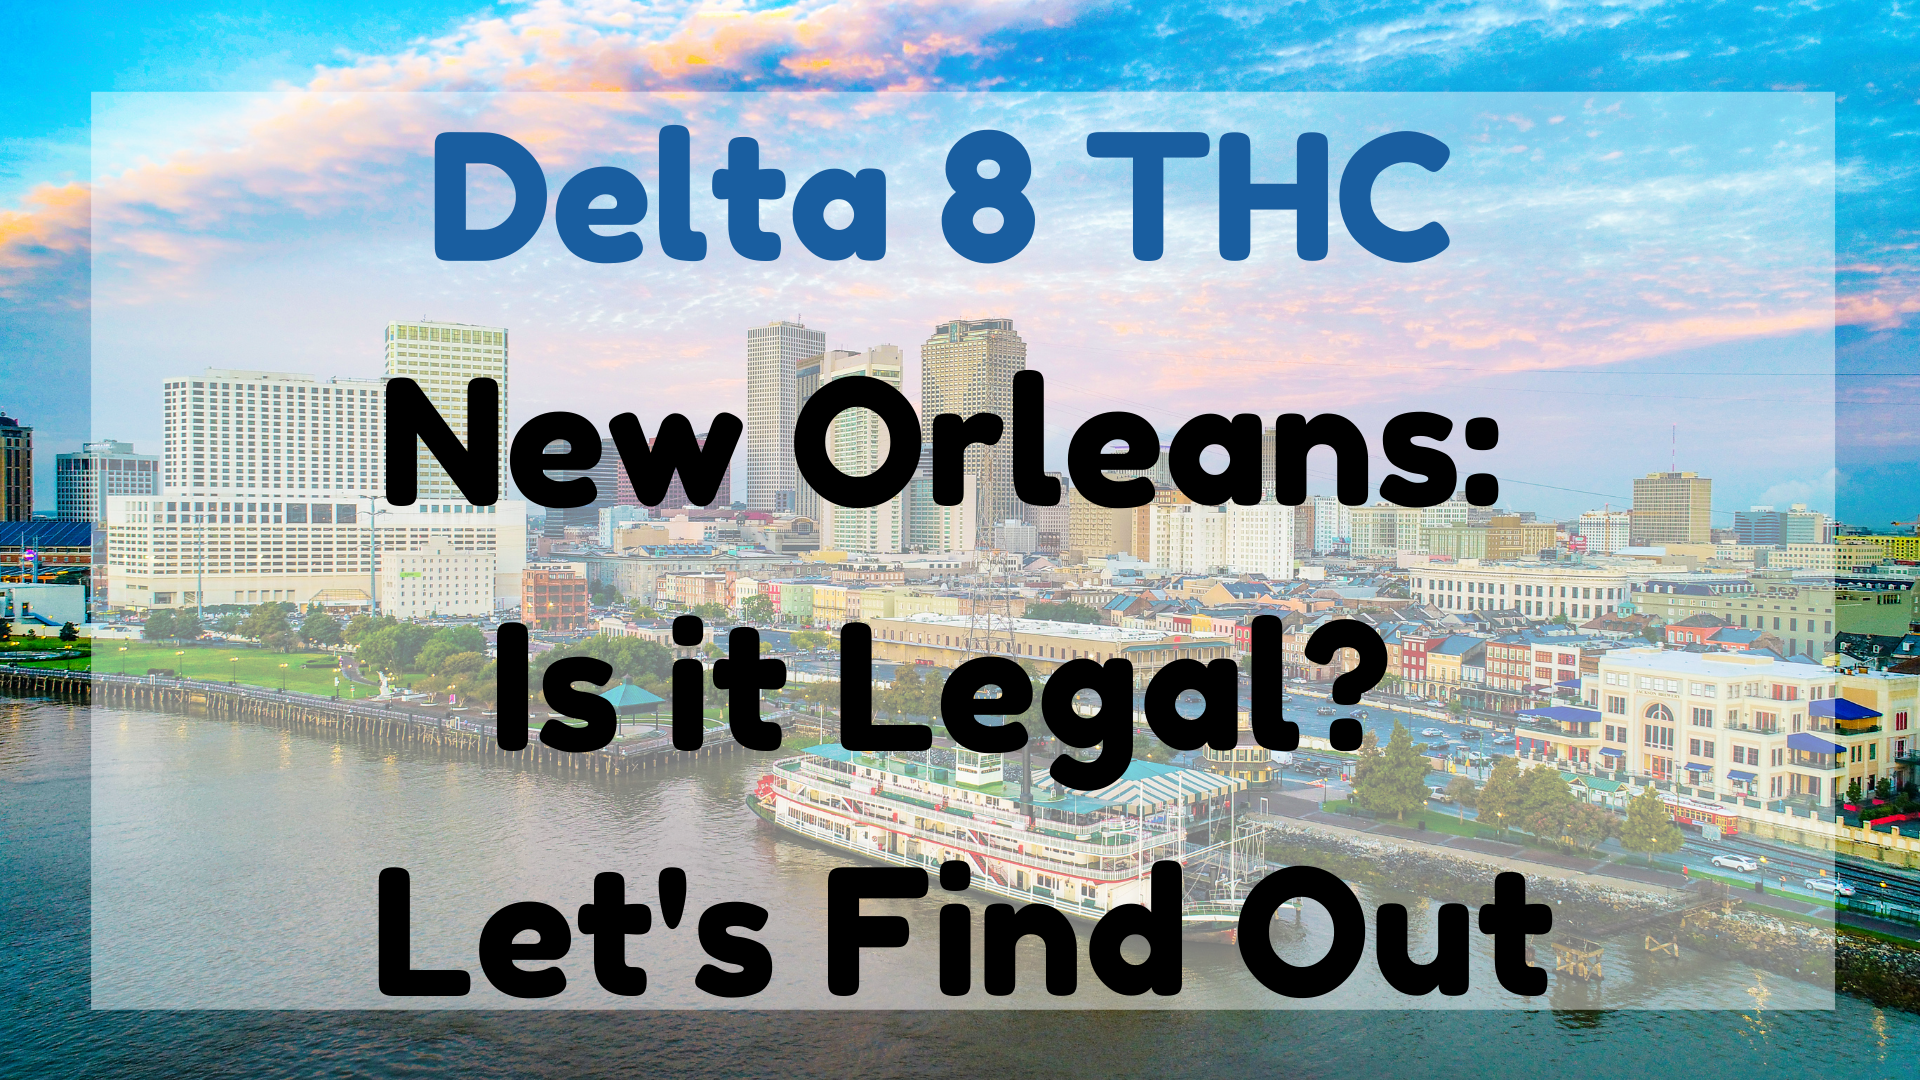 Delta 8 THC New Orleans